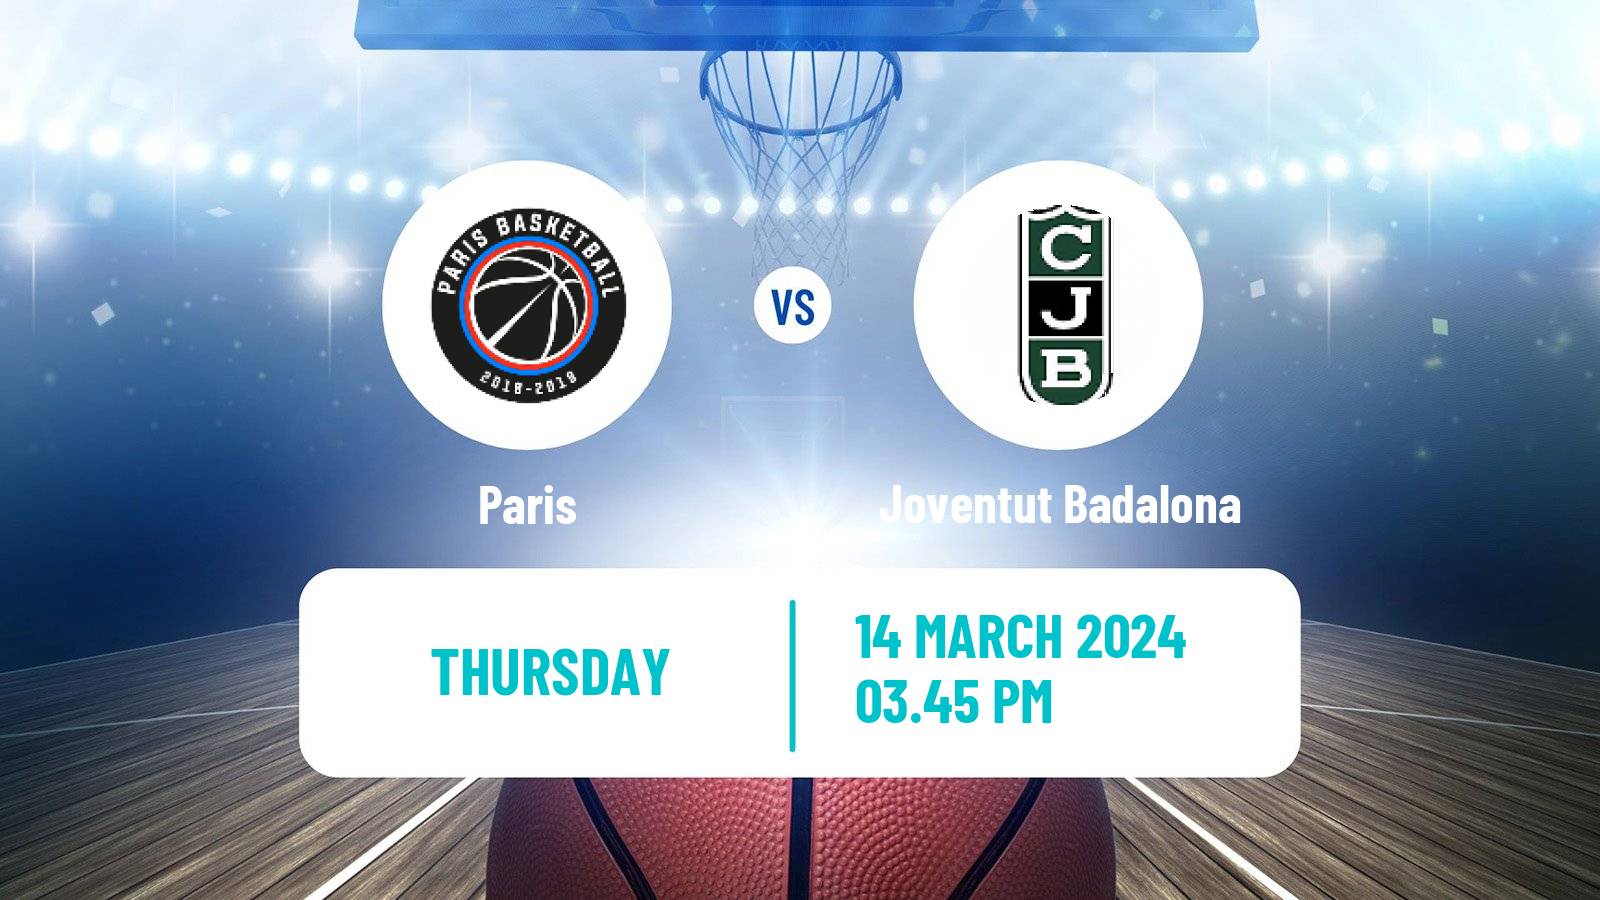 Basketball Eurocup Paris - Joventut Badalona